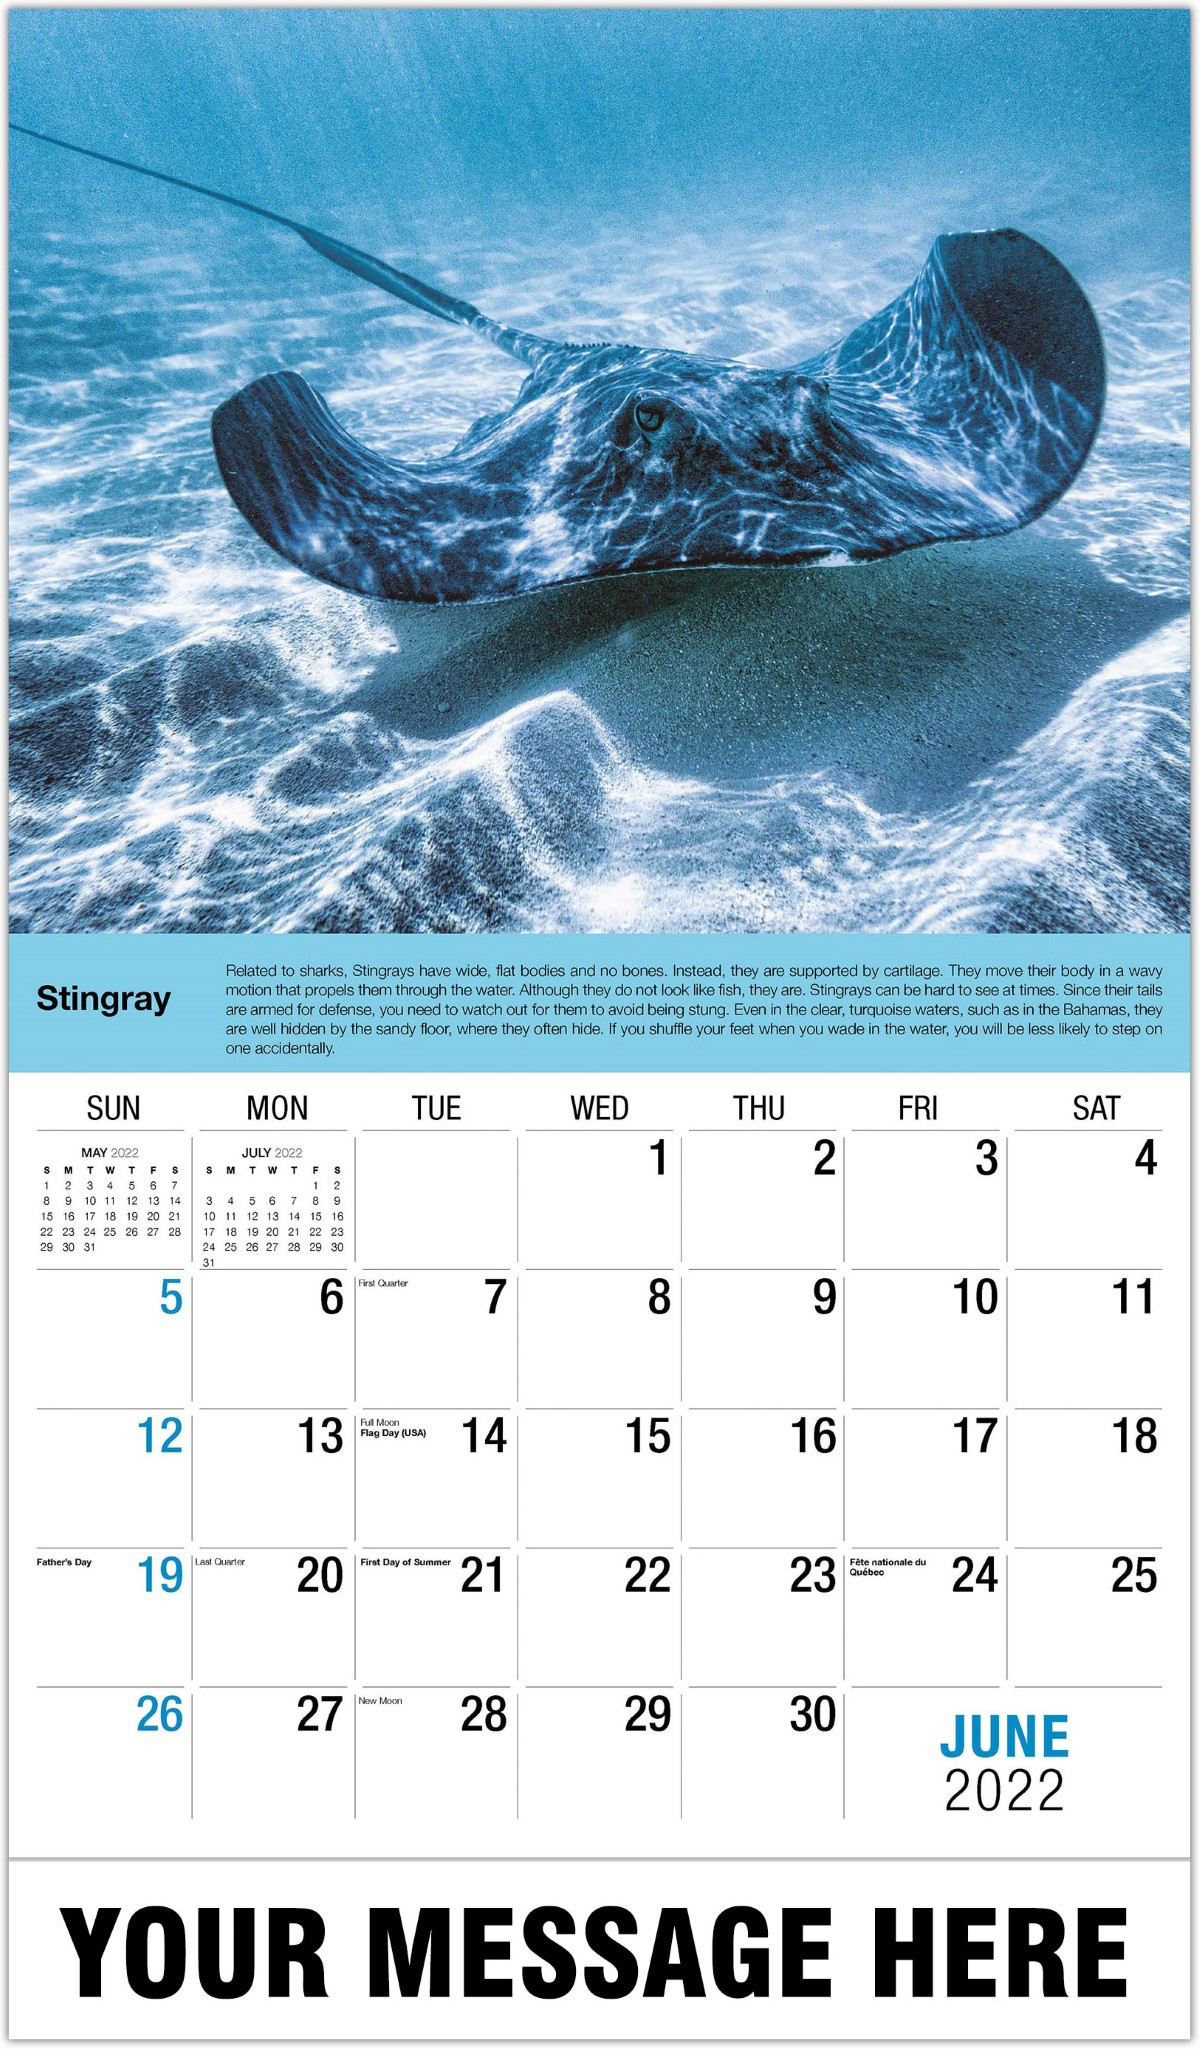 International Wildlife - 2022 Promotional Calendar  Light The World 2022 Calendar Zoo